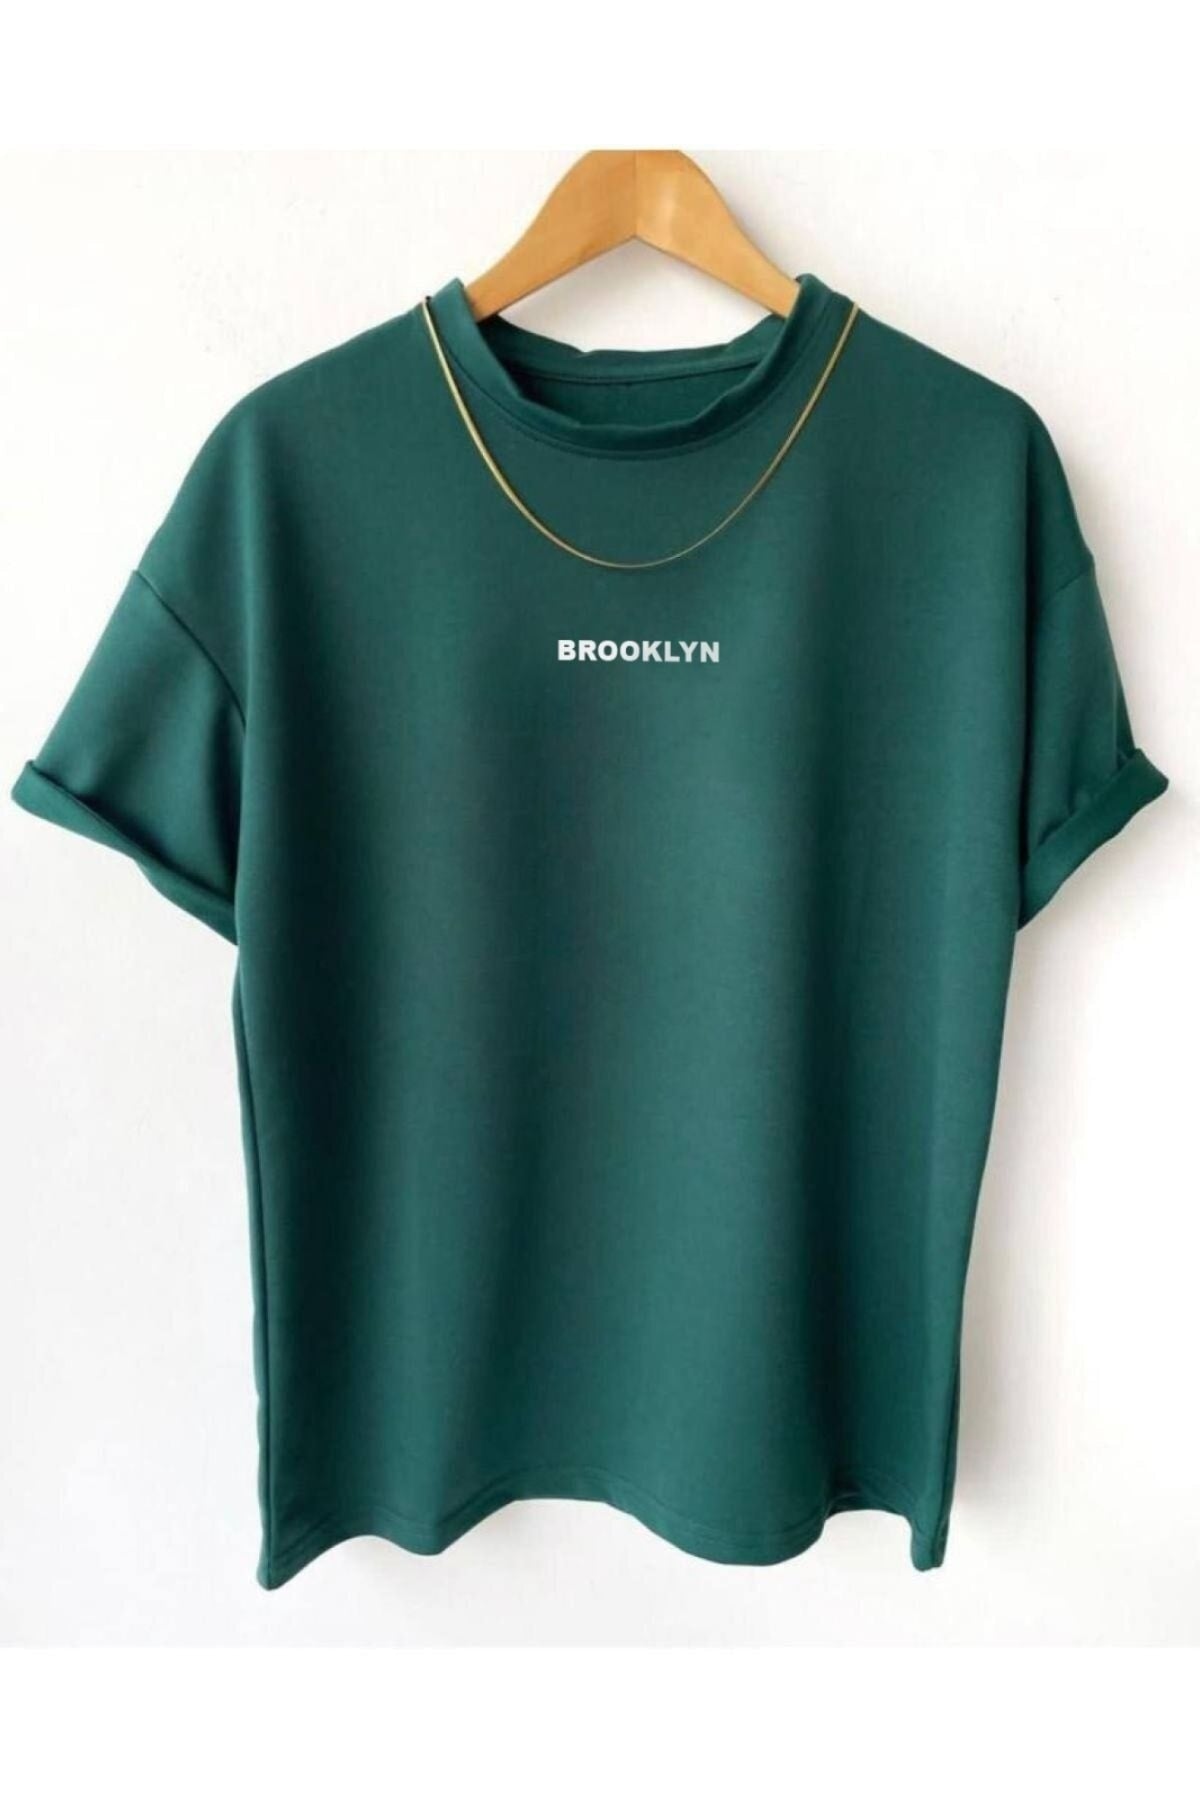 Black Street Men's Green Brooklyn Printed Tshirt